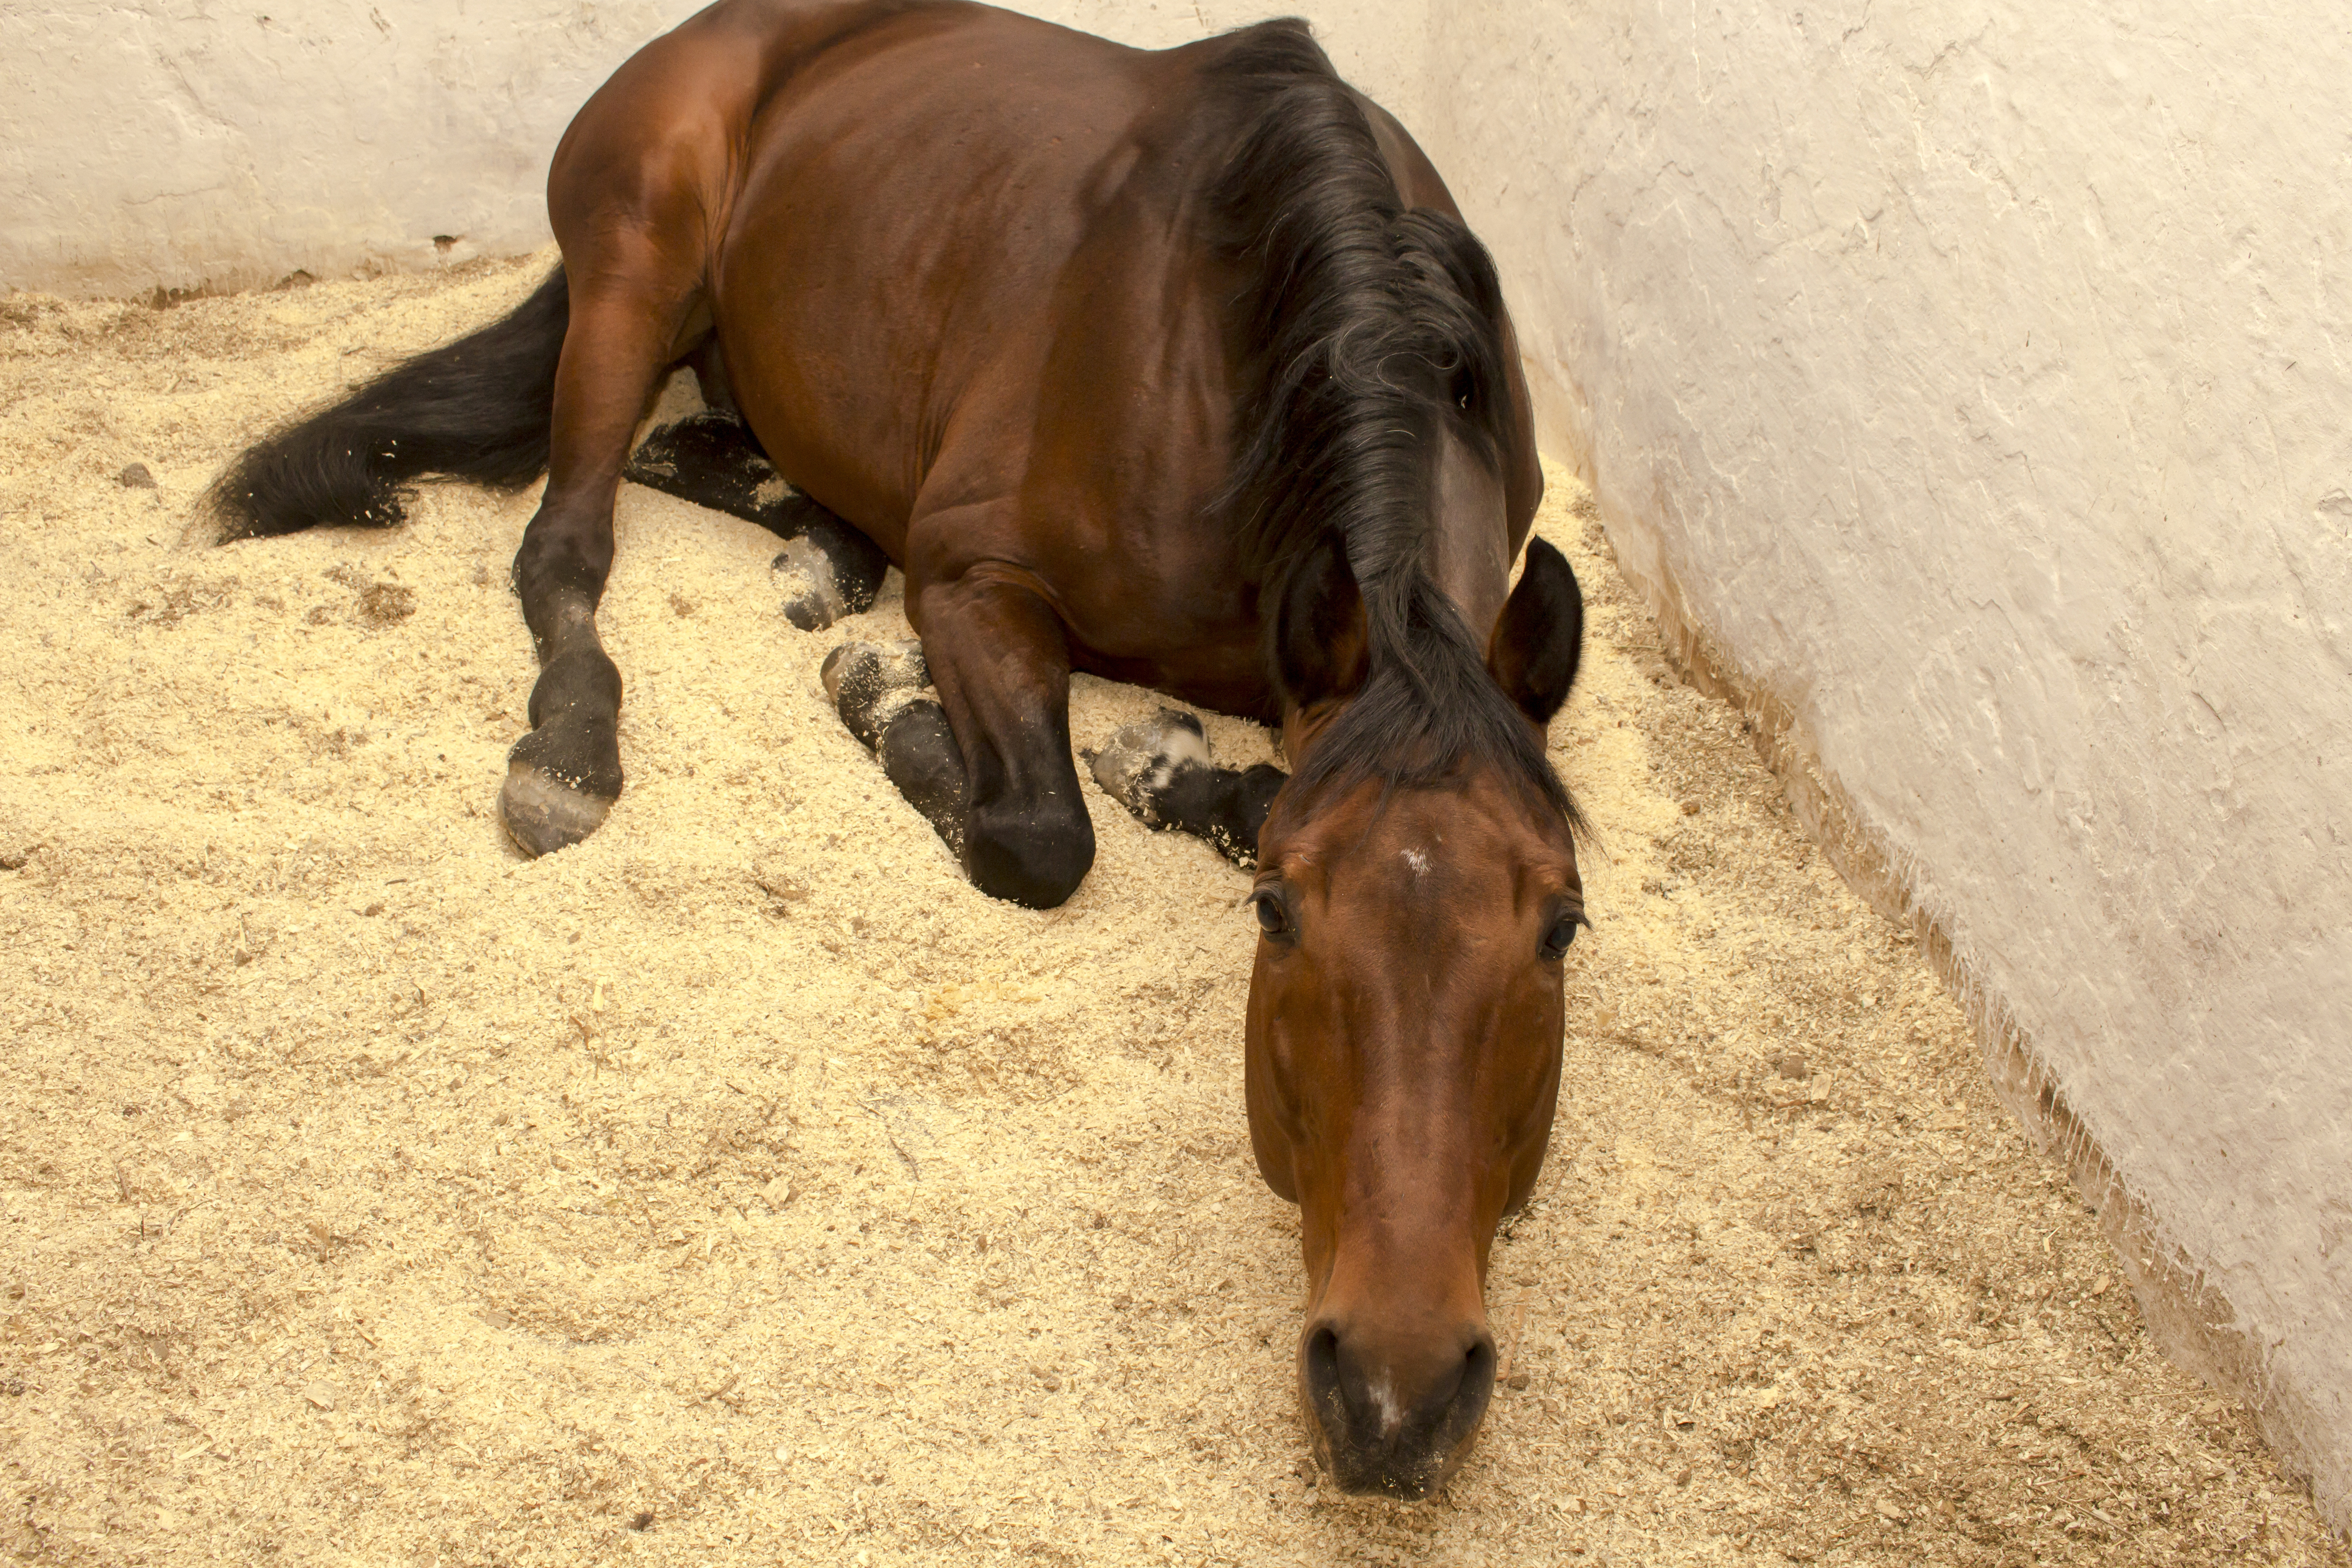 A horse lying down in fresh shavings bedding